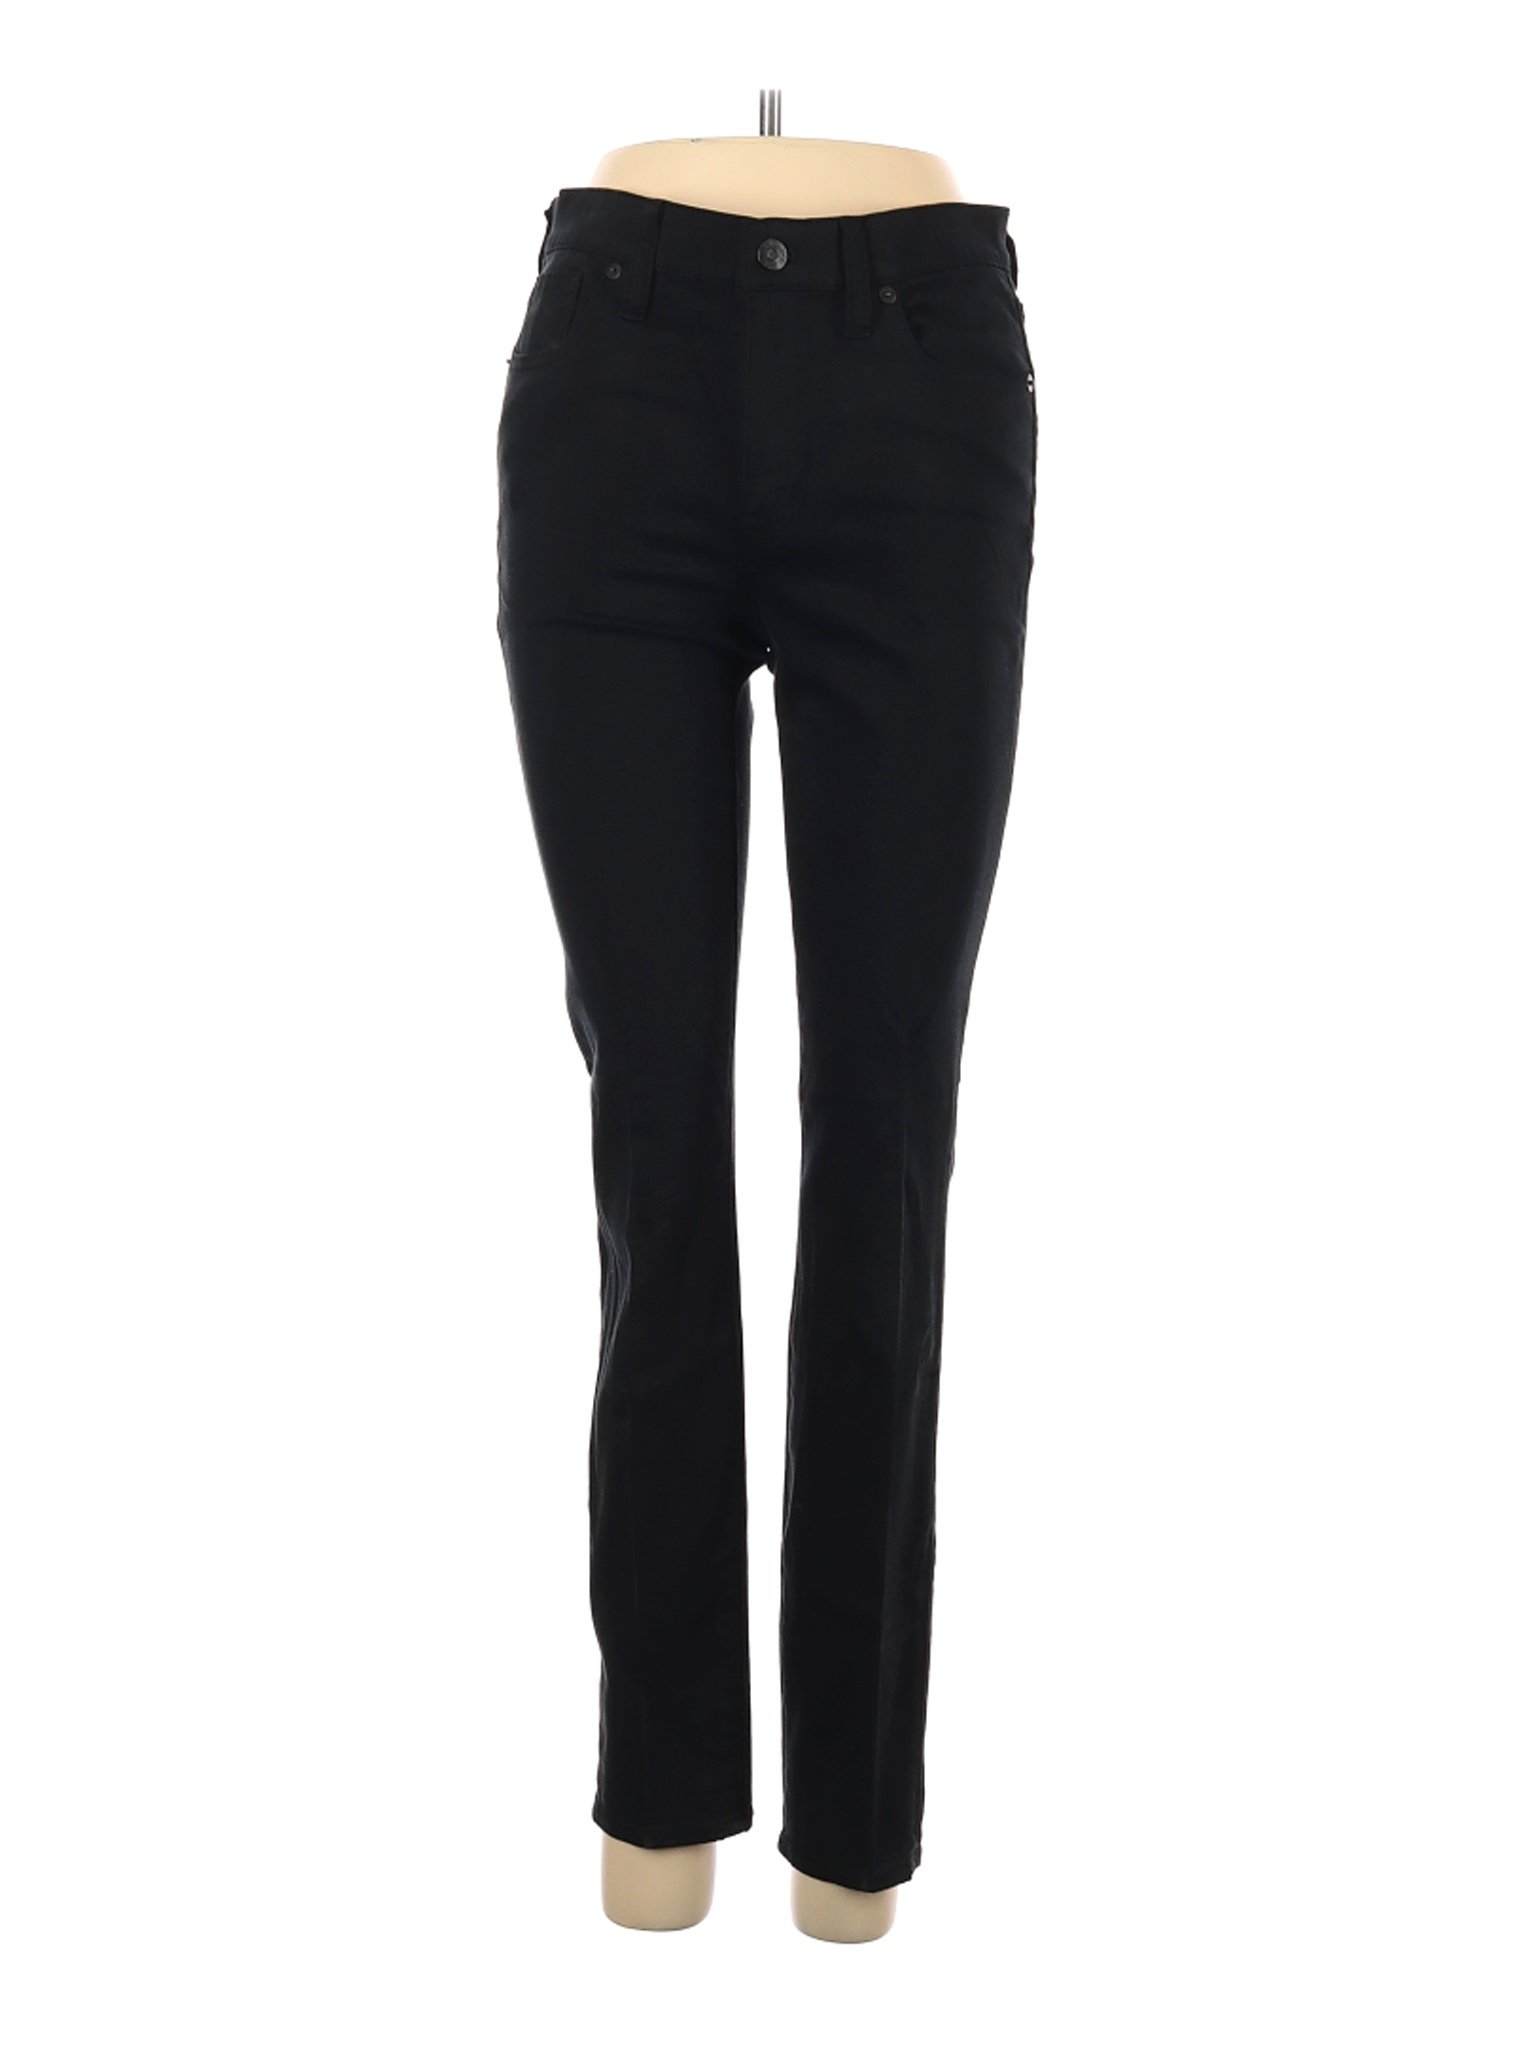 Madewell Women Black Jeans 27W | eBay